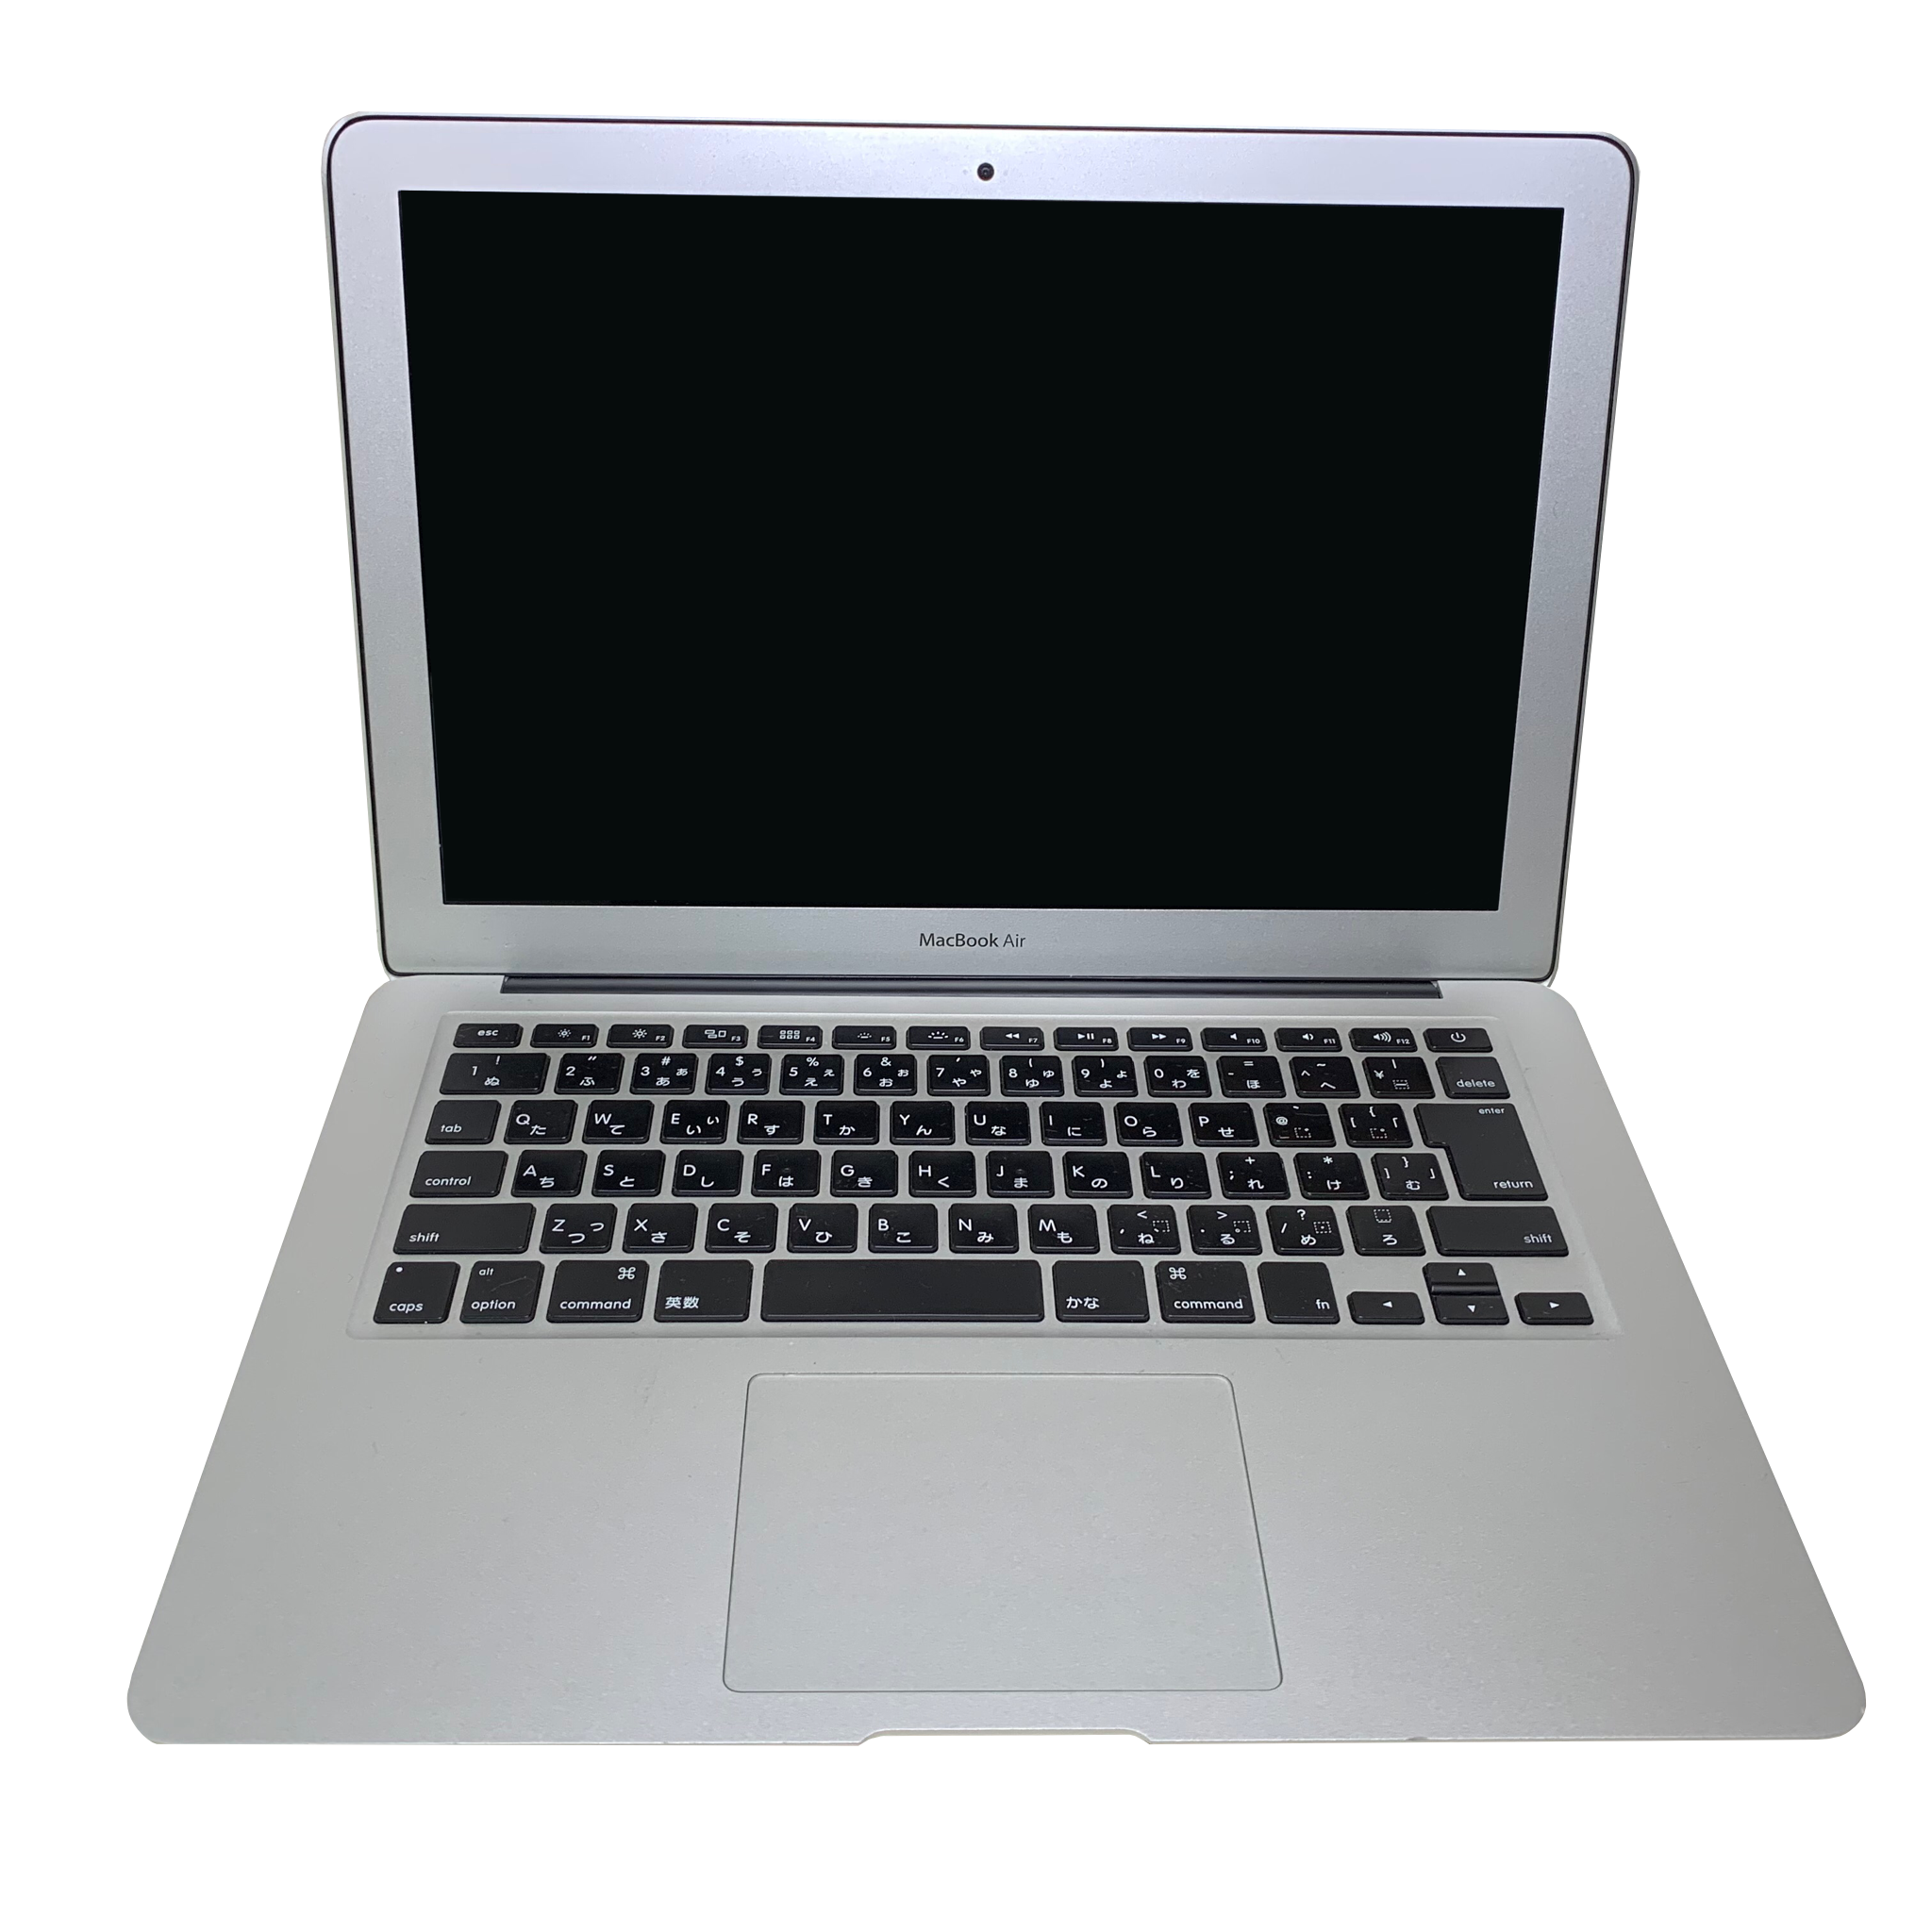 MacBook Air初心者でもネットすぐ使えるノートPC